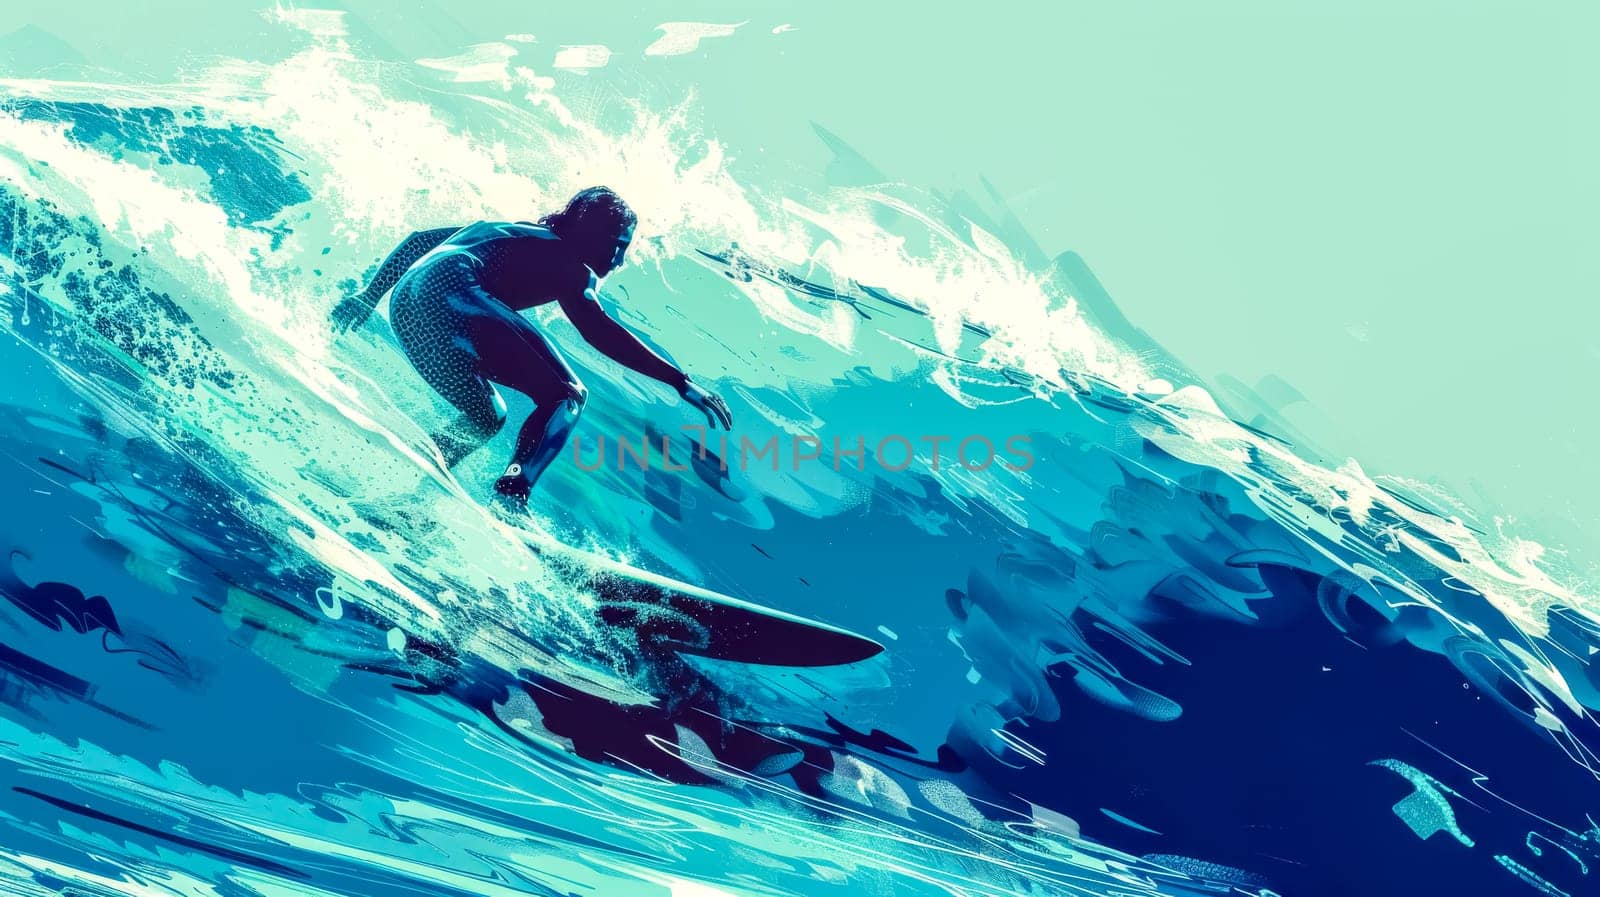 Dynamic surfer riding ocean wave illustration by Edophoto